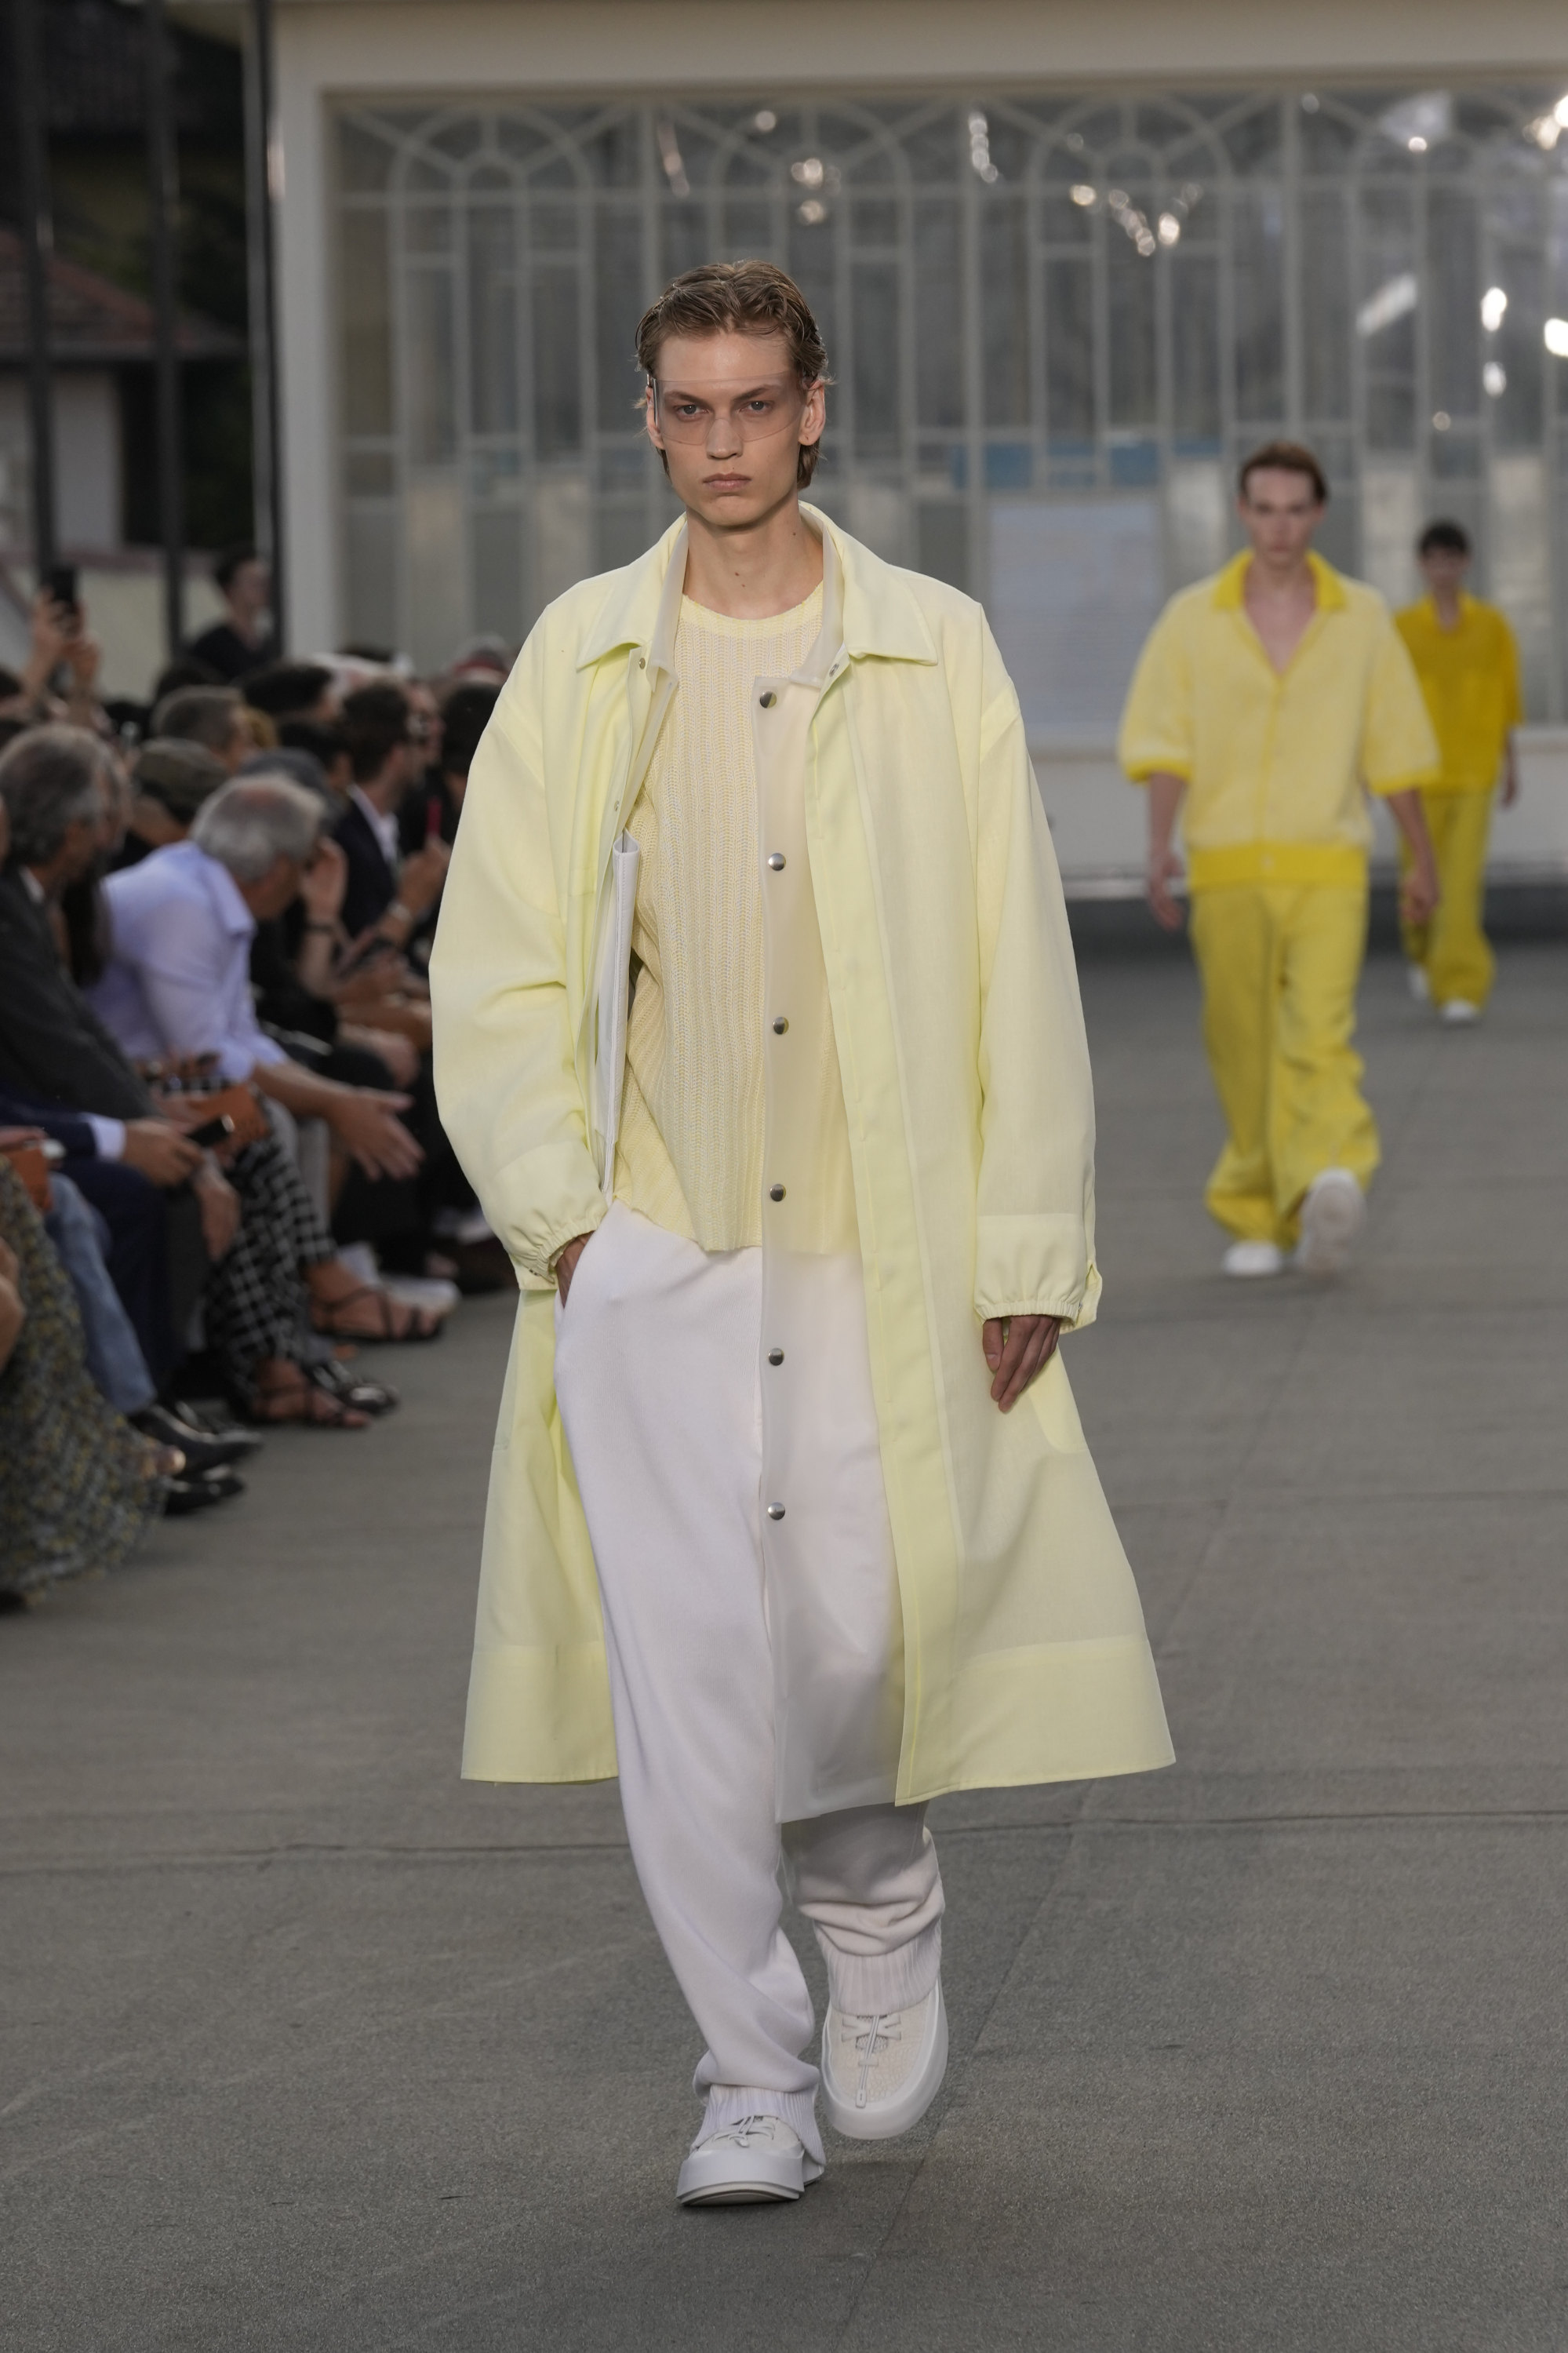 Milan Men’s Fashion Week: Zegna flaunted light, minimalist pieces ...